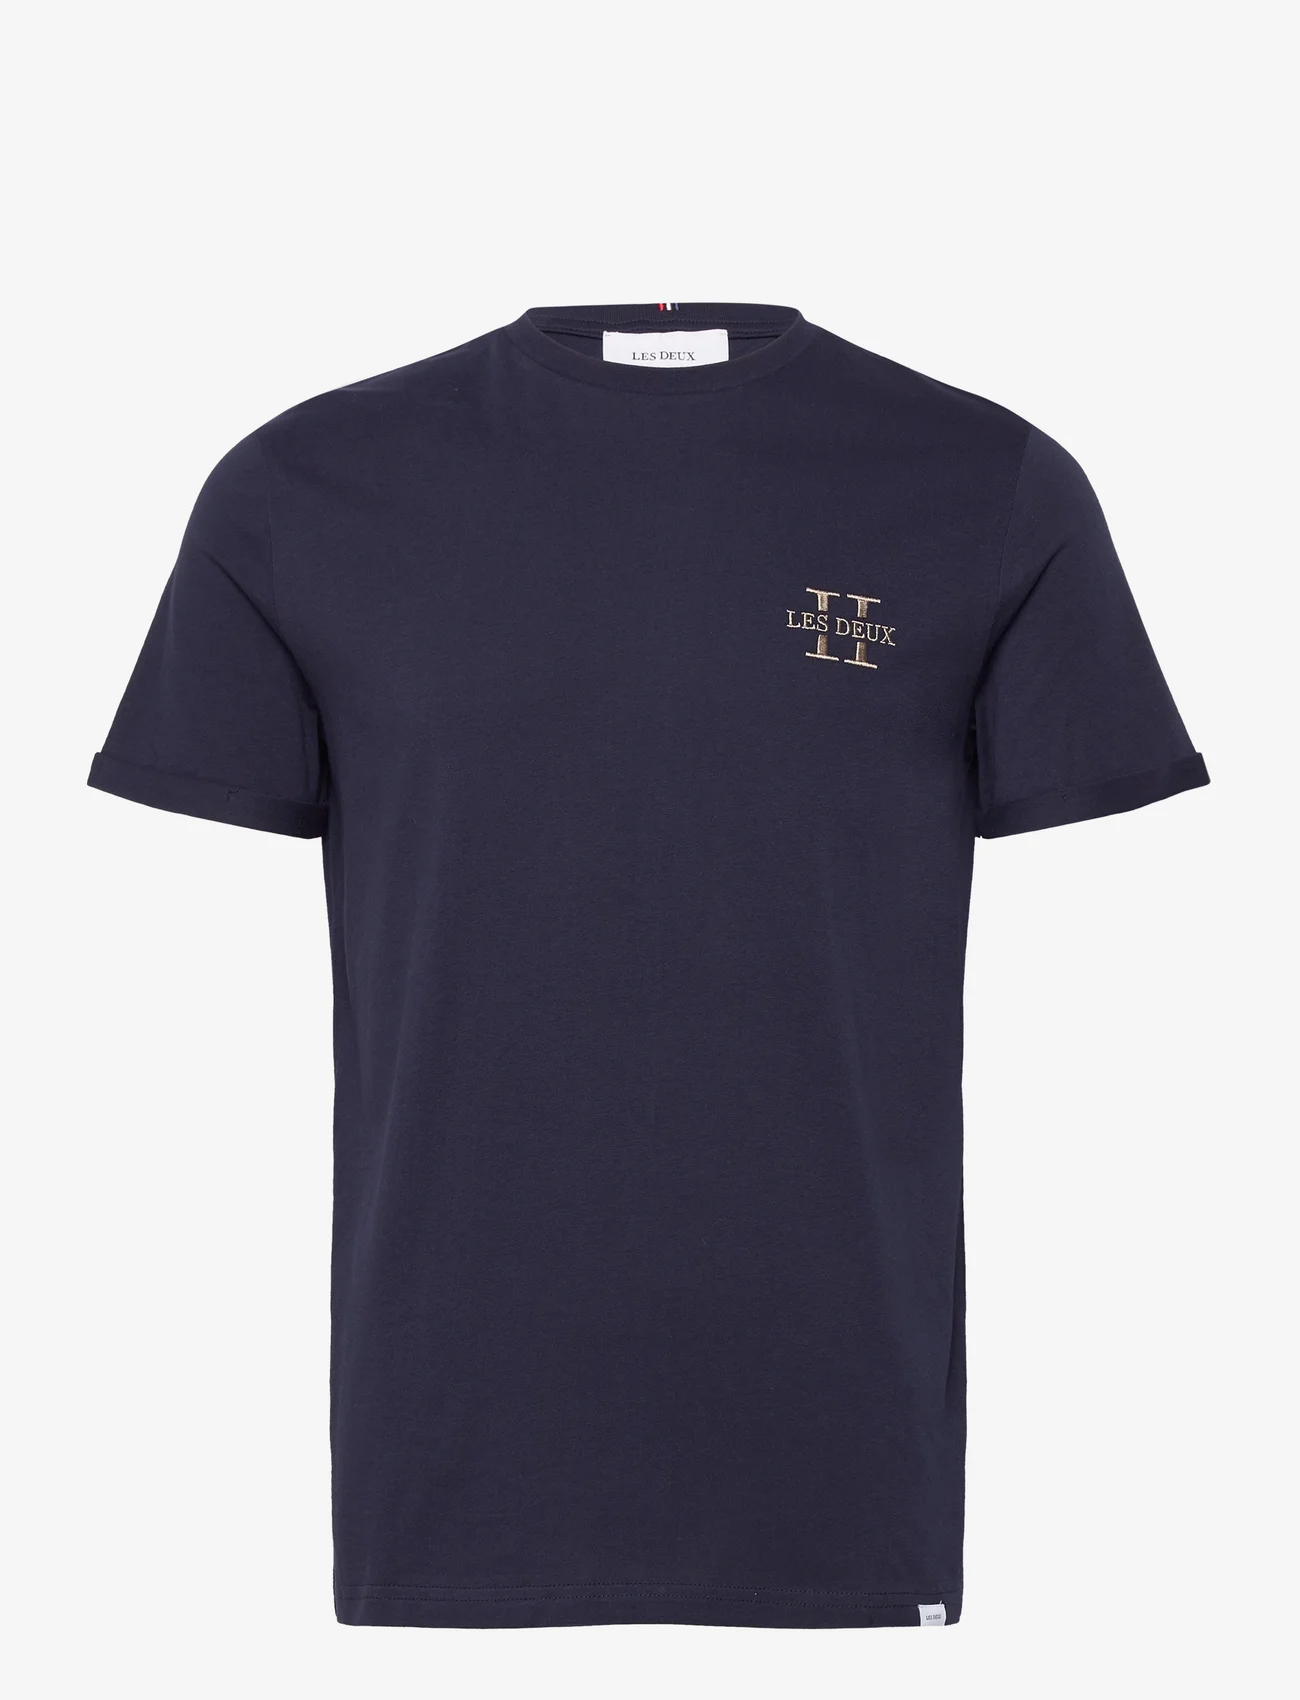 Les Deux - Les Deux II T-Shirt 2.0 - marškinėliai trumpomis rankovėmis - dark navy/platinum - 0